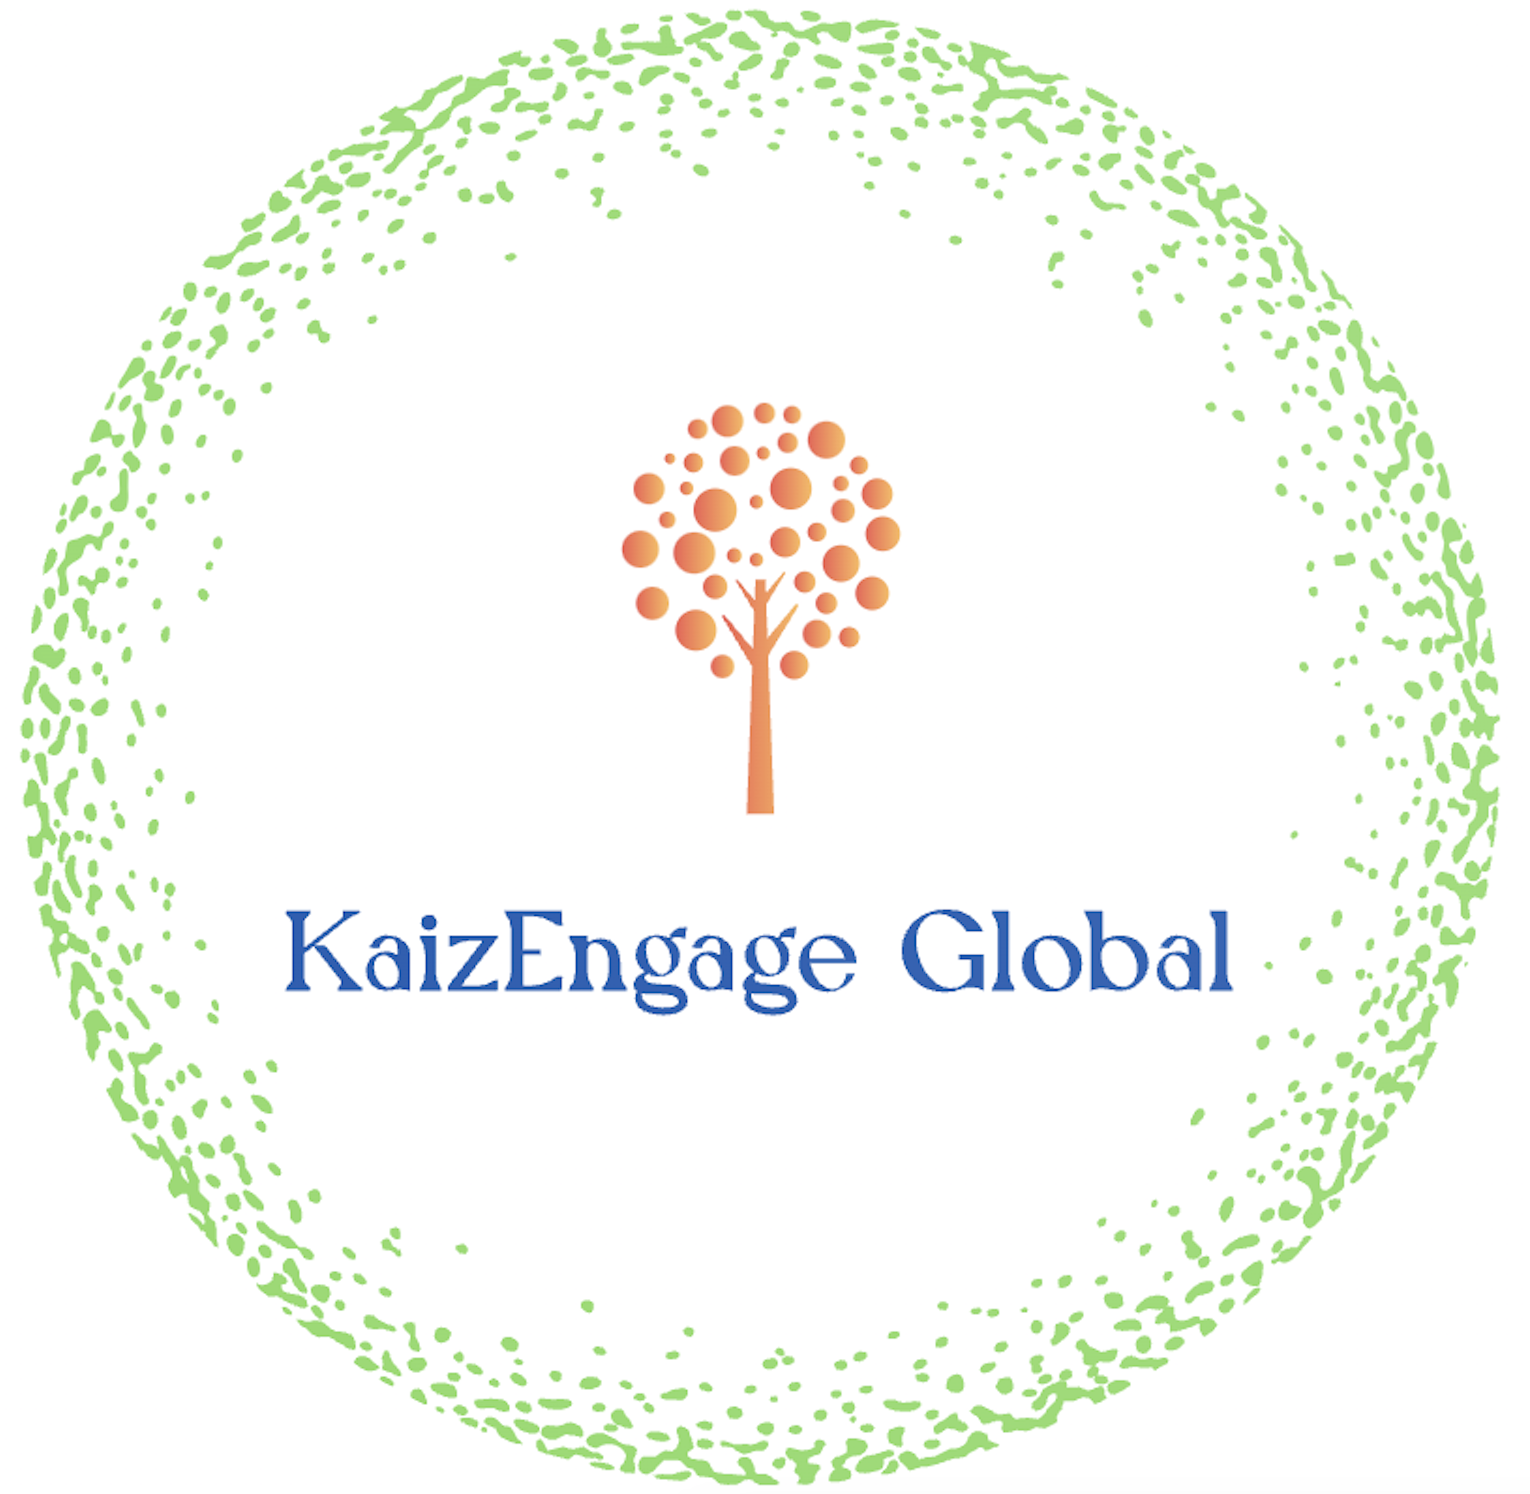 KaizEngage Global